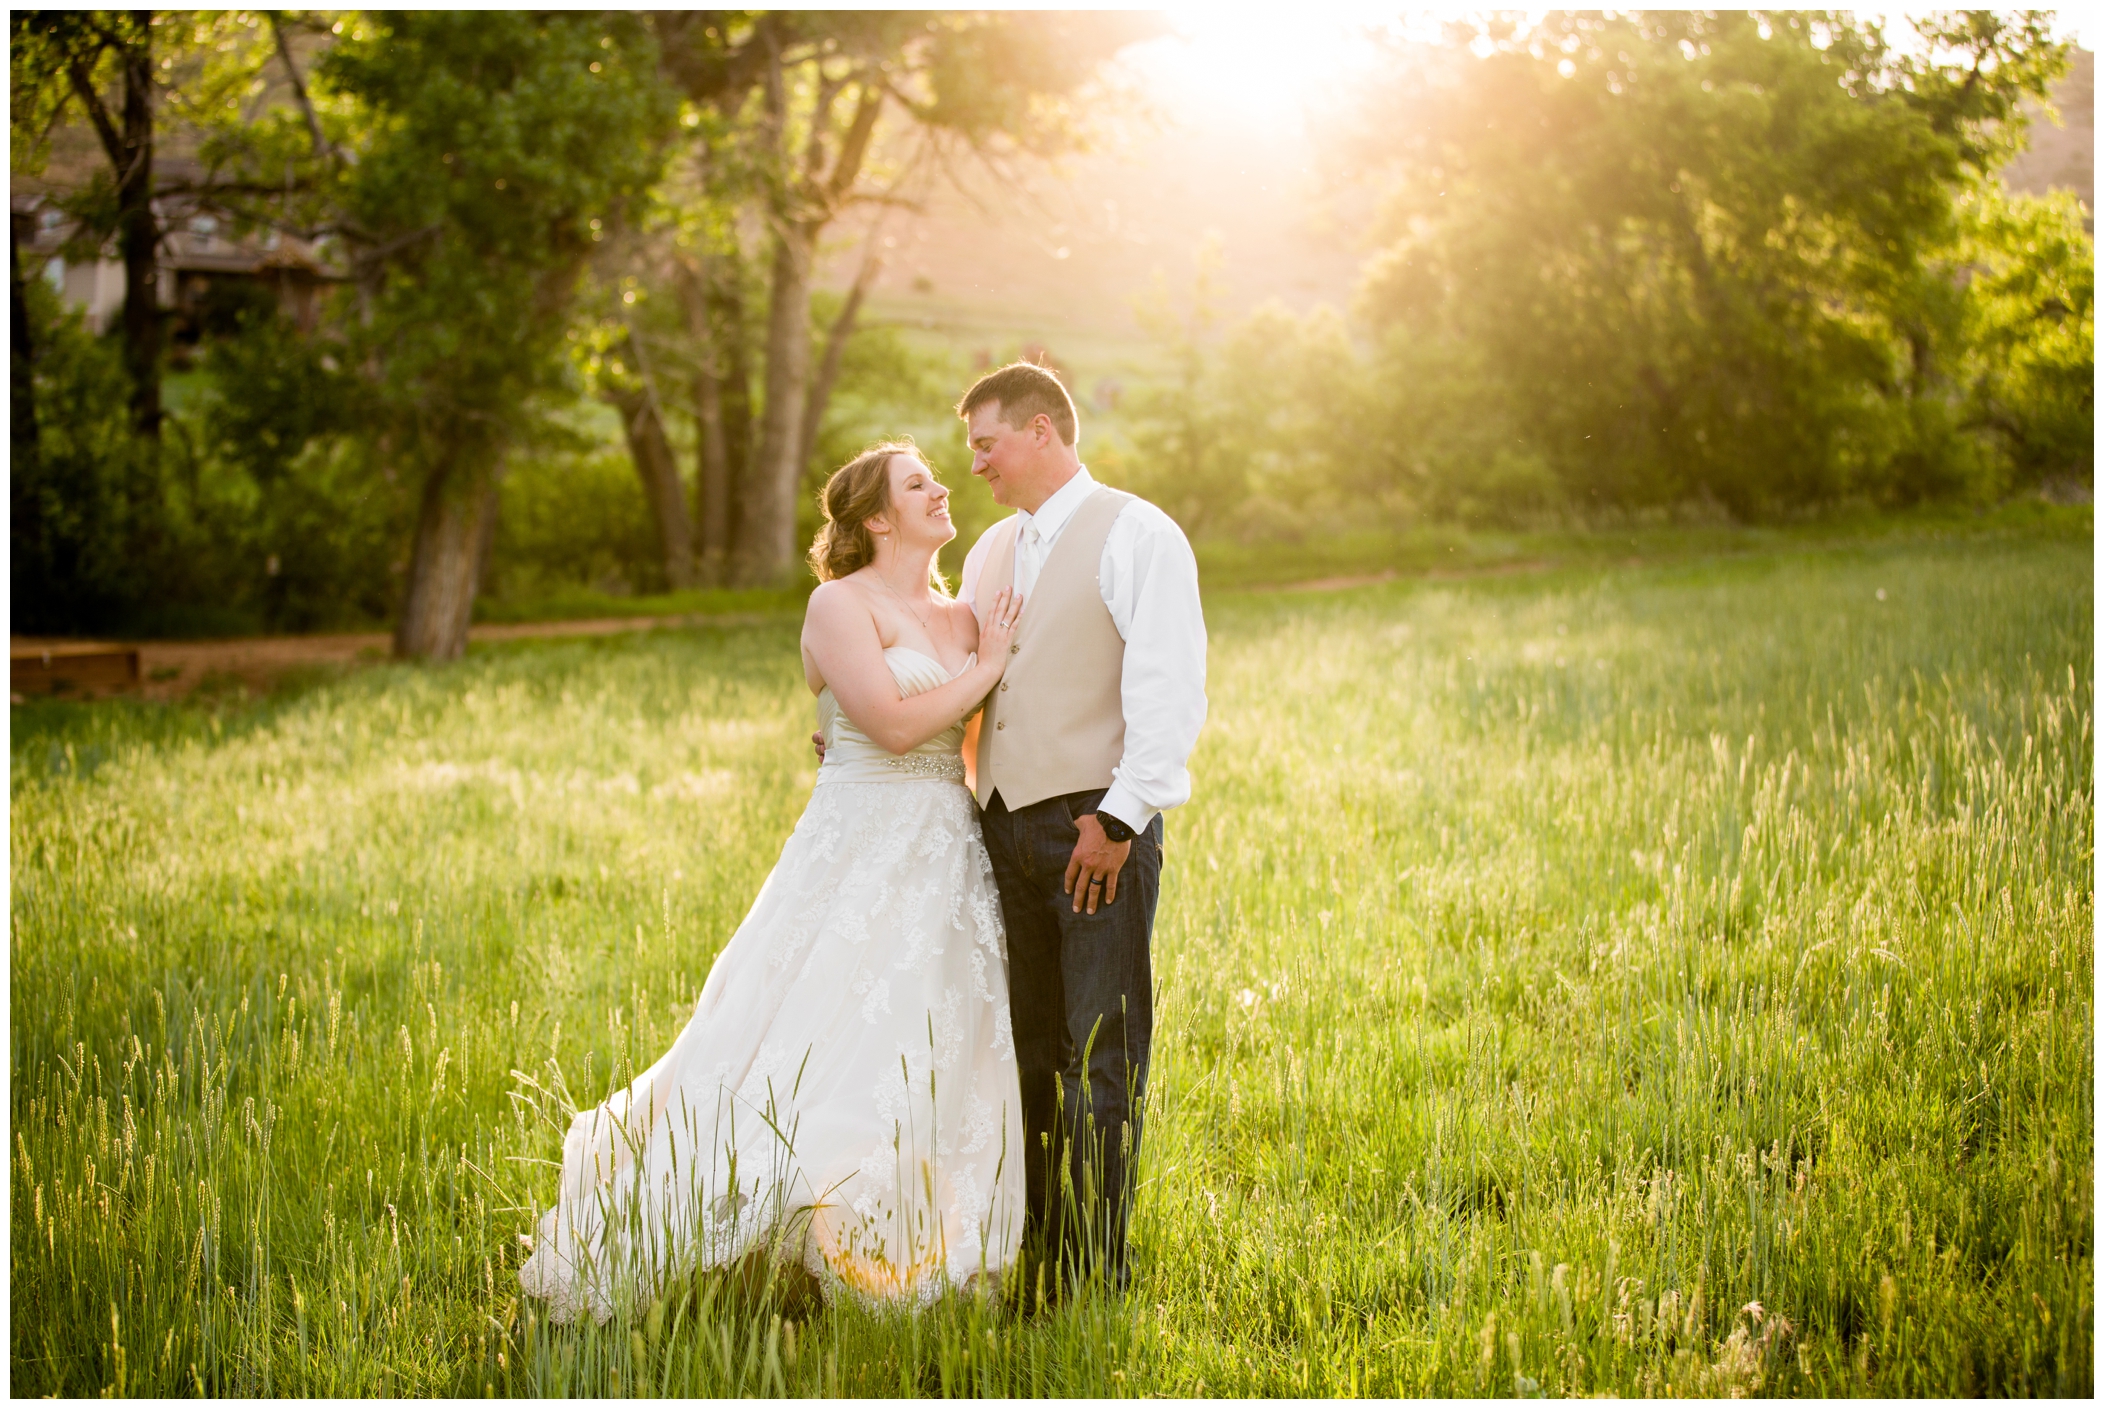 Ellis Ranch wedding photos by Loveland Colorado photographer Plum Pretty Photography